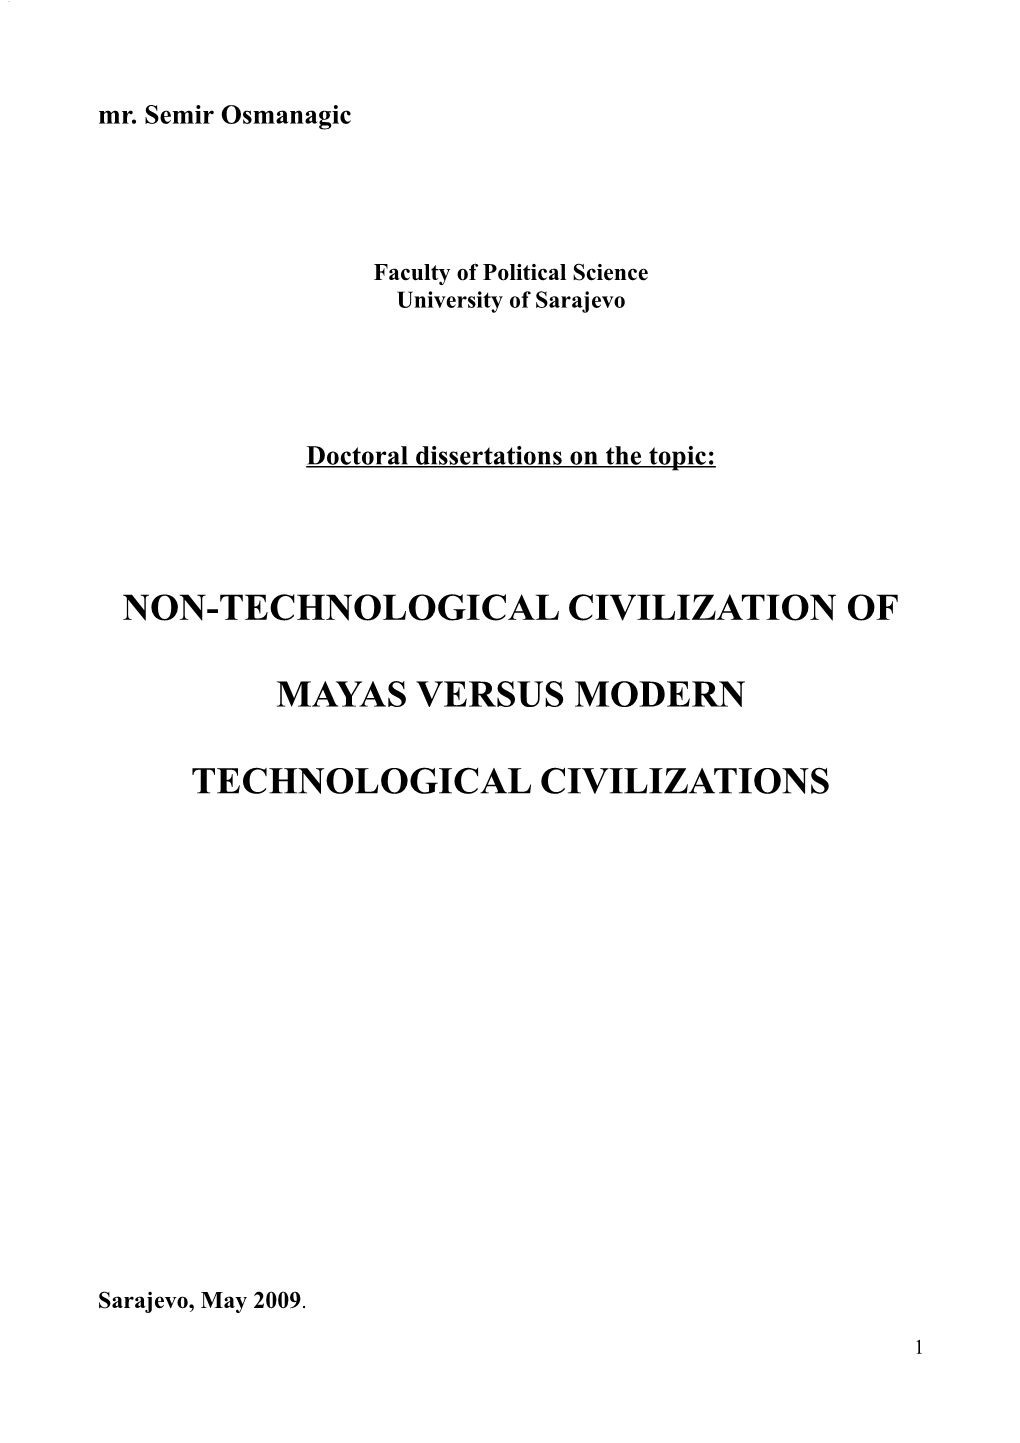 Non-Technological Civilization of Mayas Versus